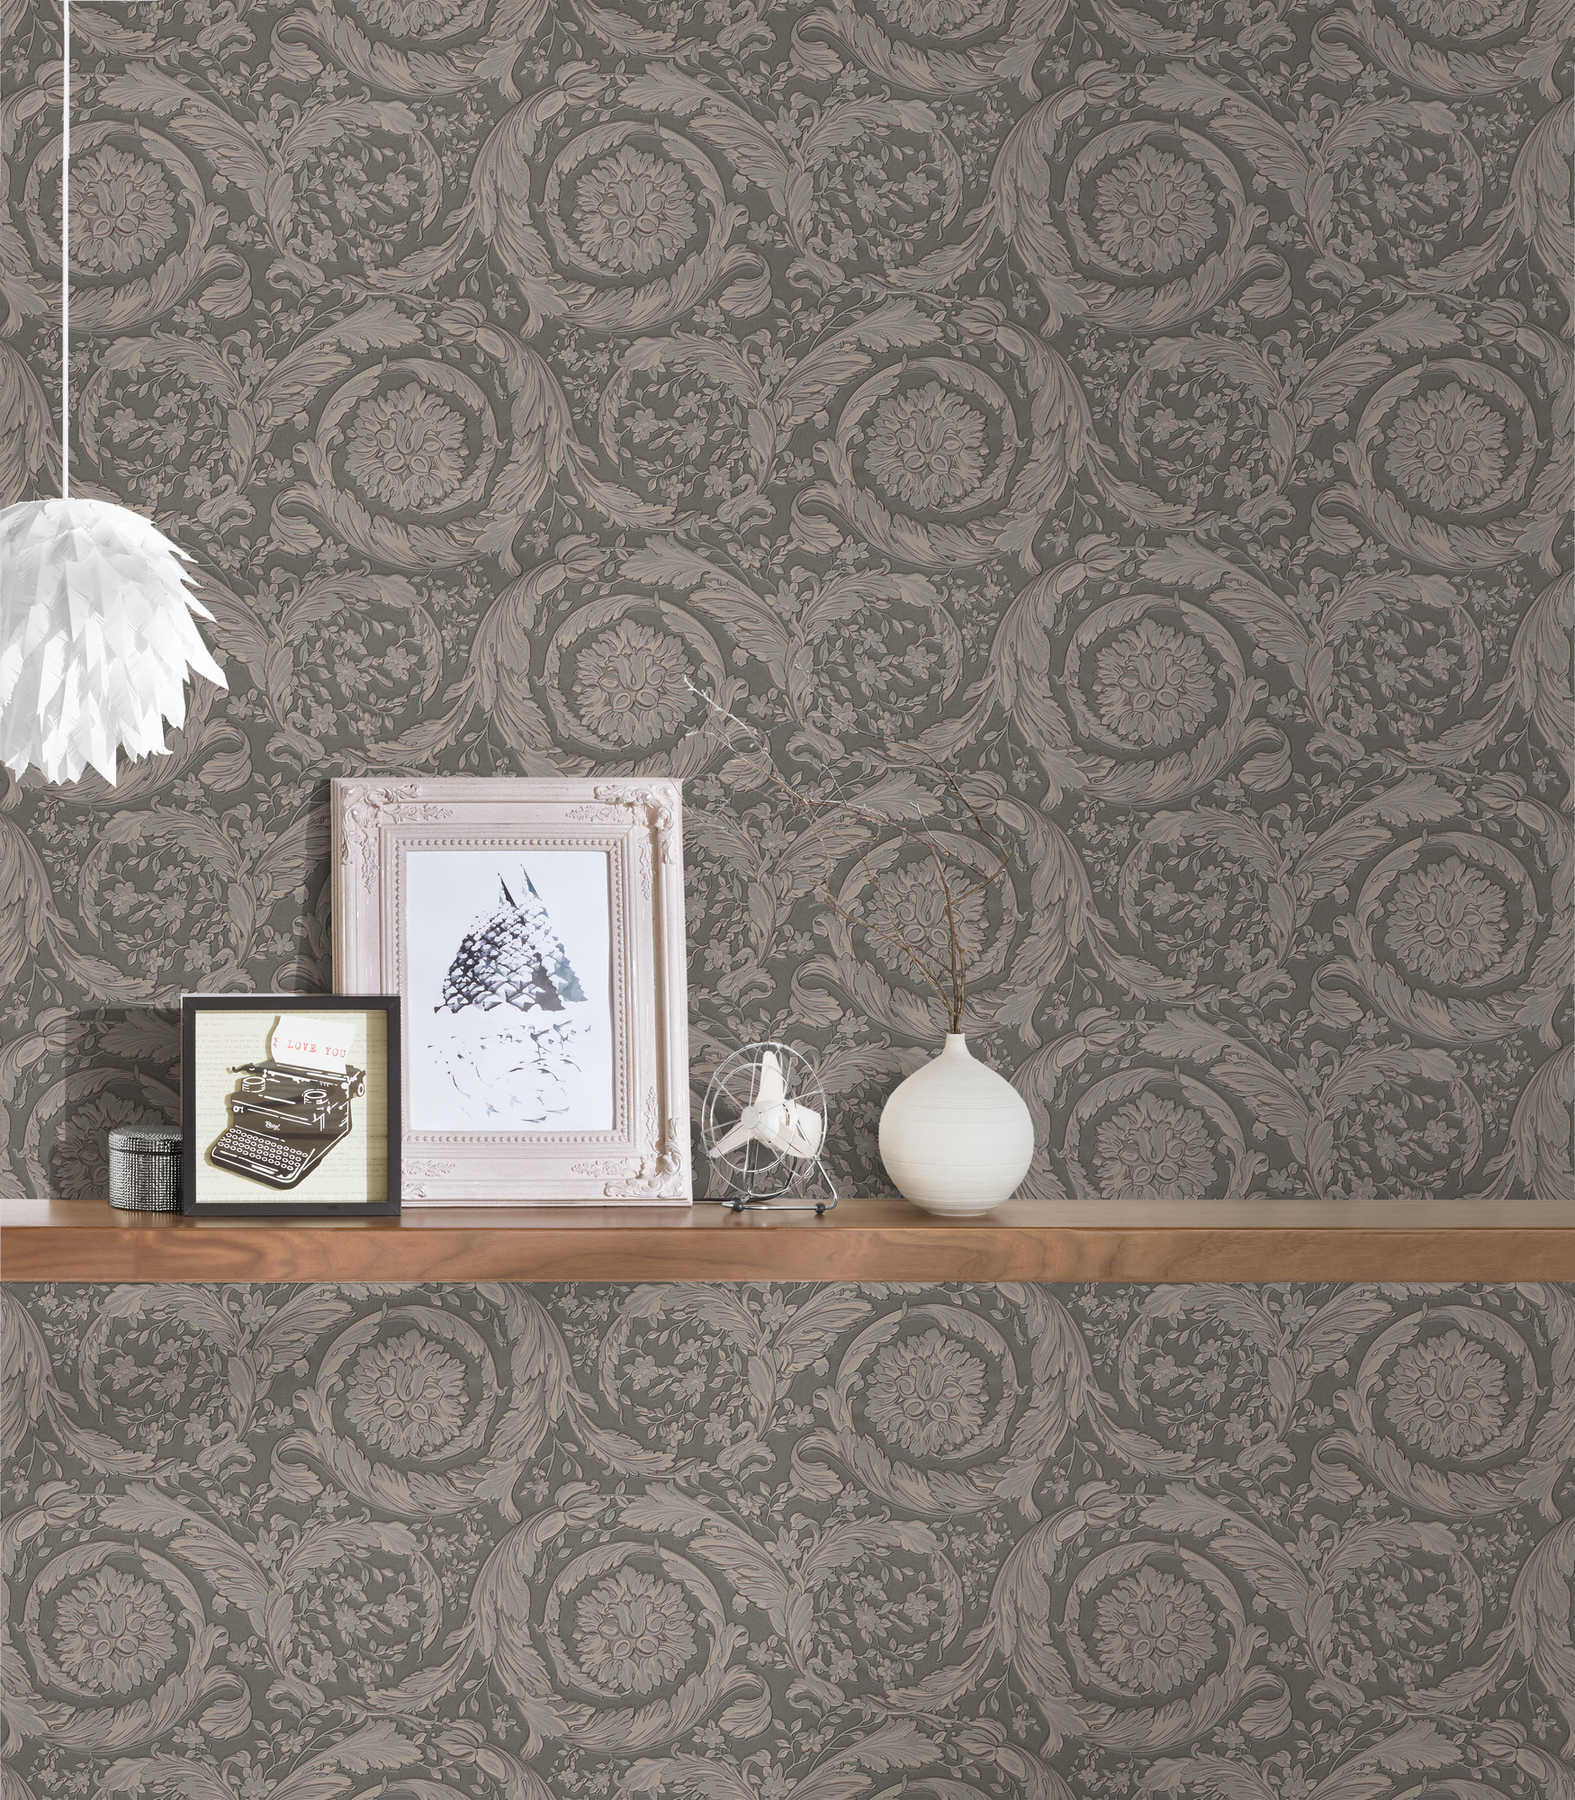             Non-woven wallpaper VERSACE ornament pattern floral - grey, metallic
        